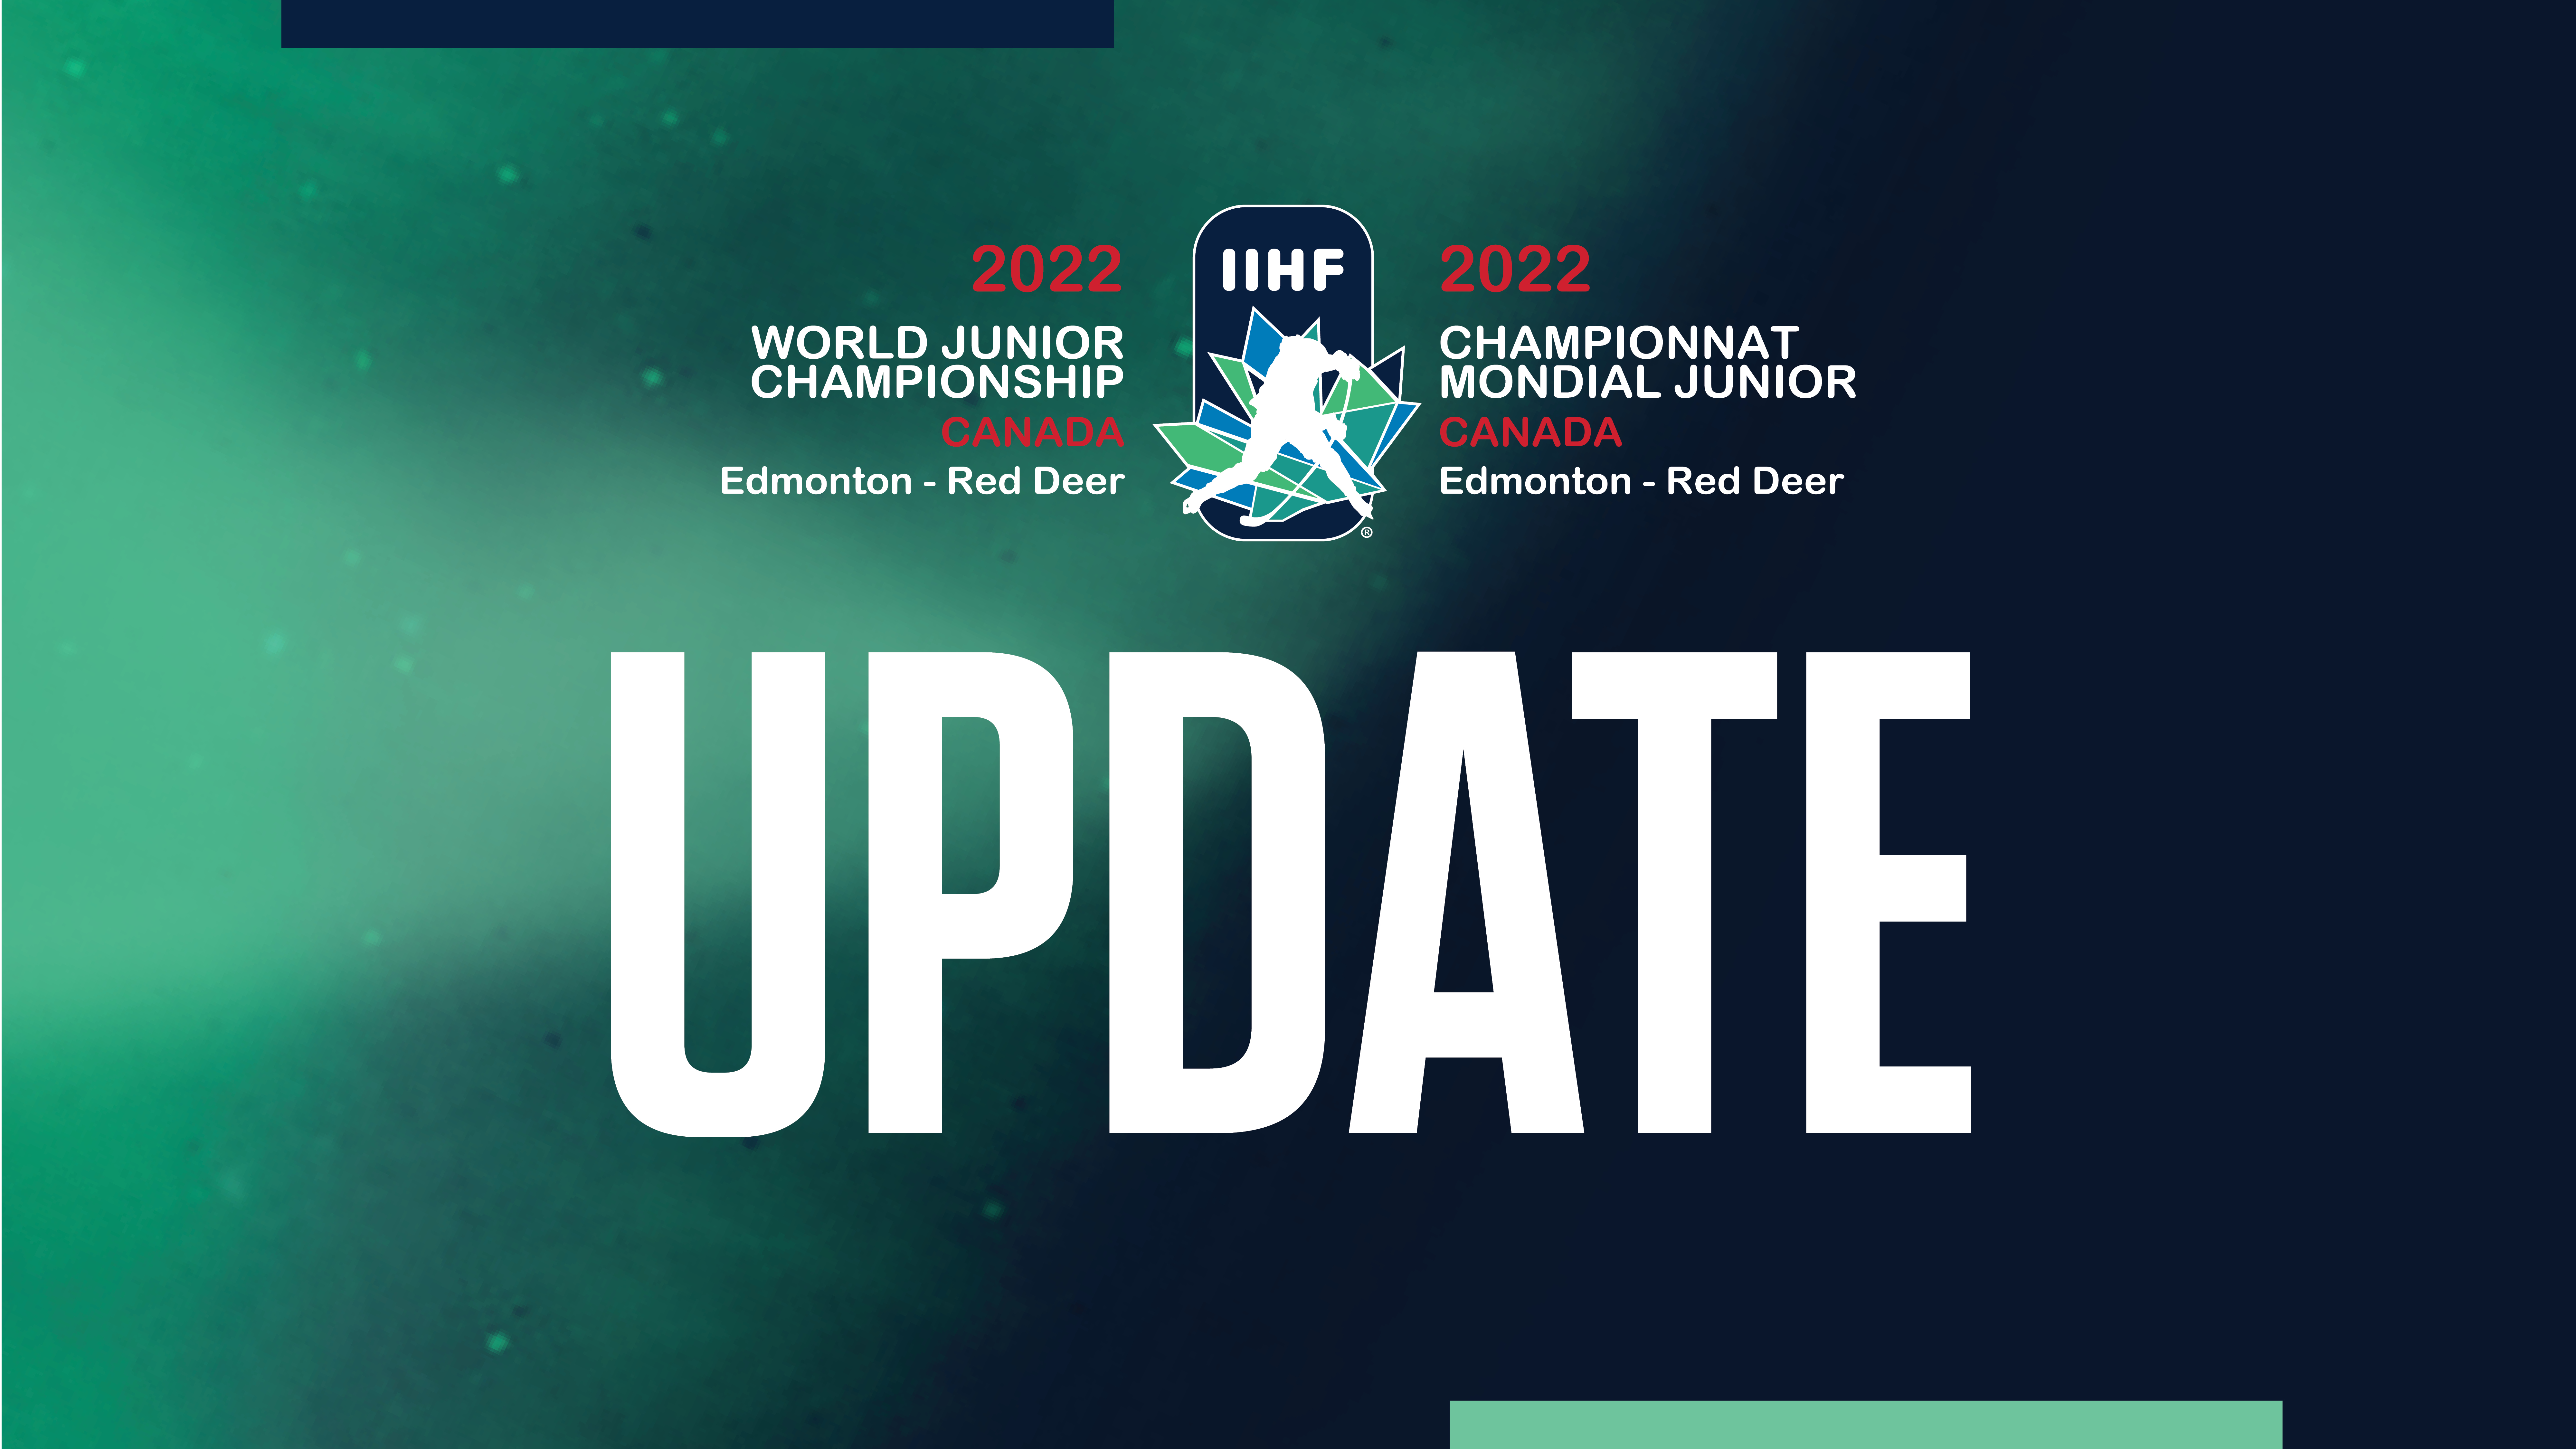 Hockey Canada statement on 2022 IIHF World Junior Championship fan capacity